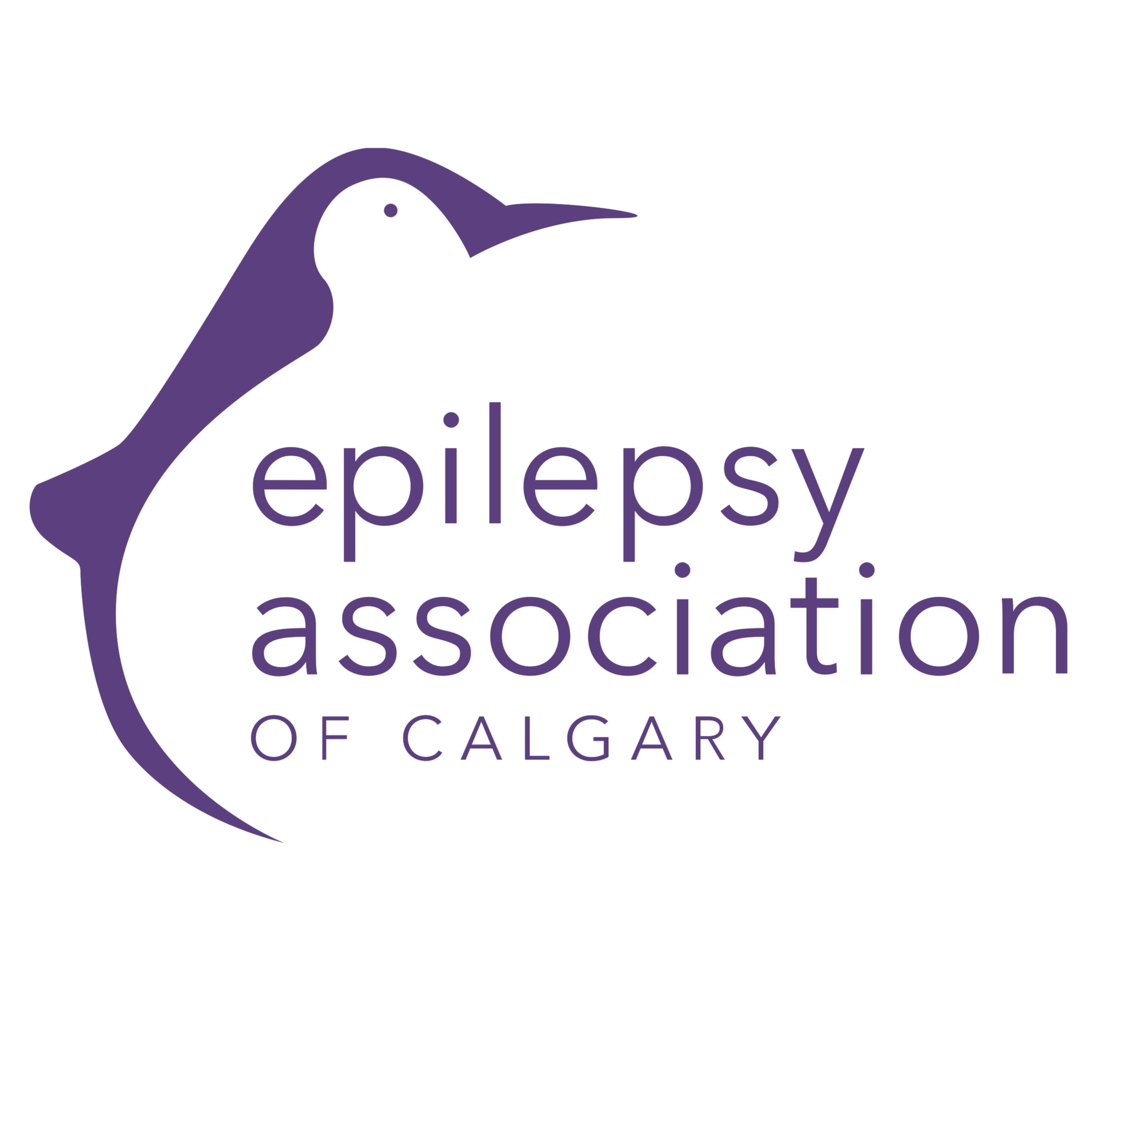 Epilepsy association of Calgary logo